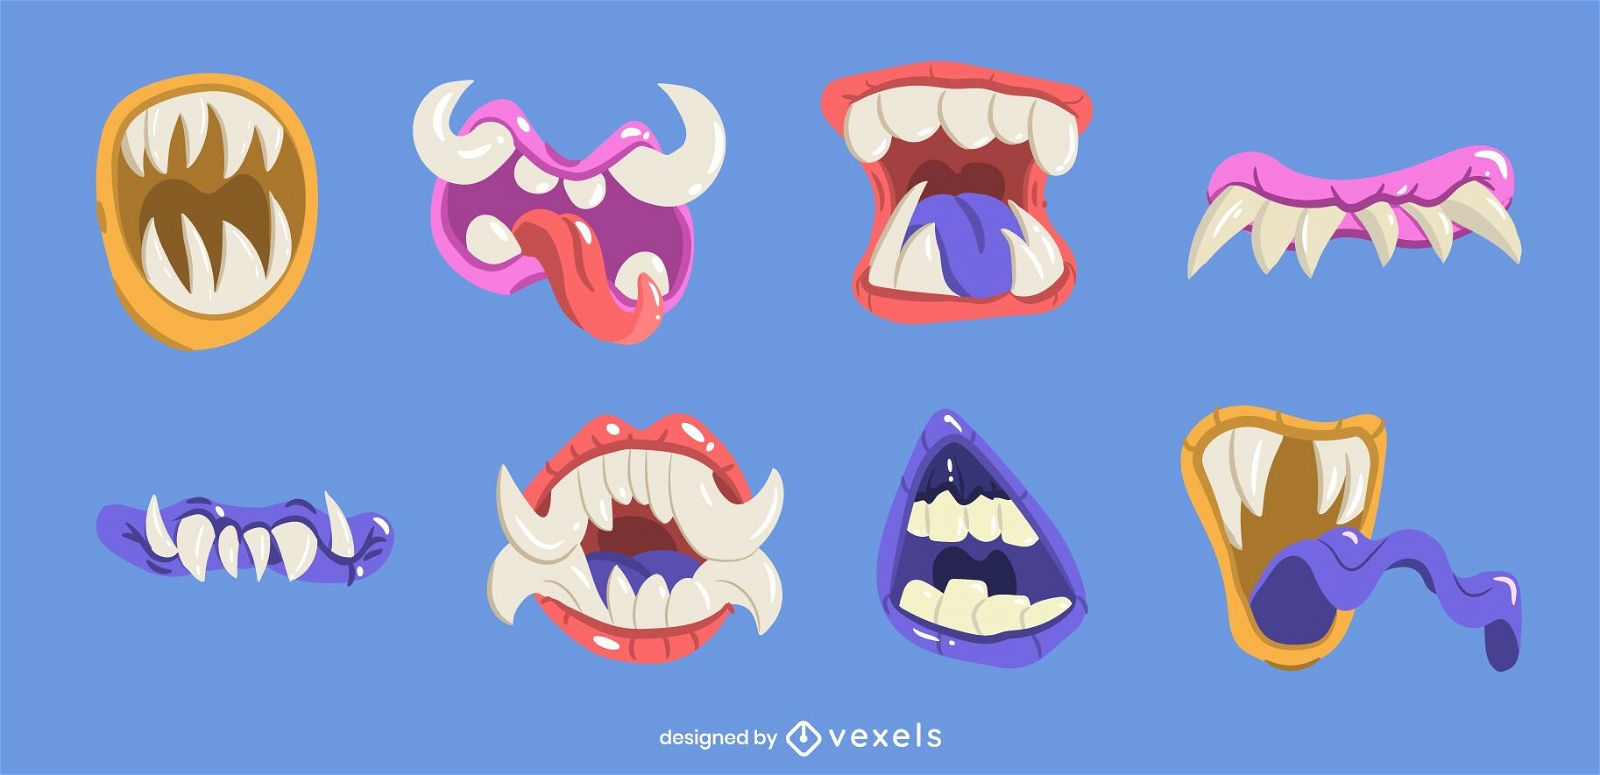 Monster mouth set